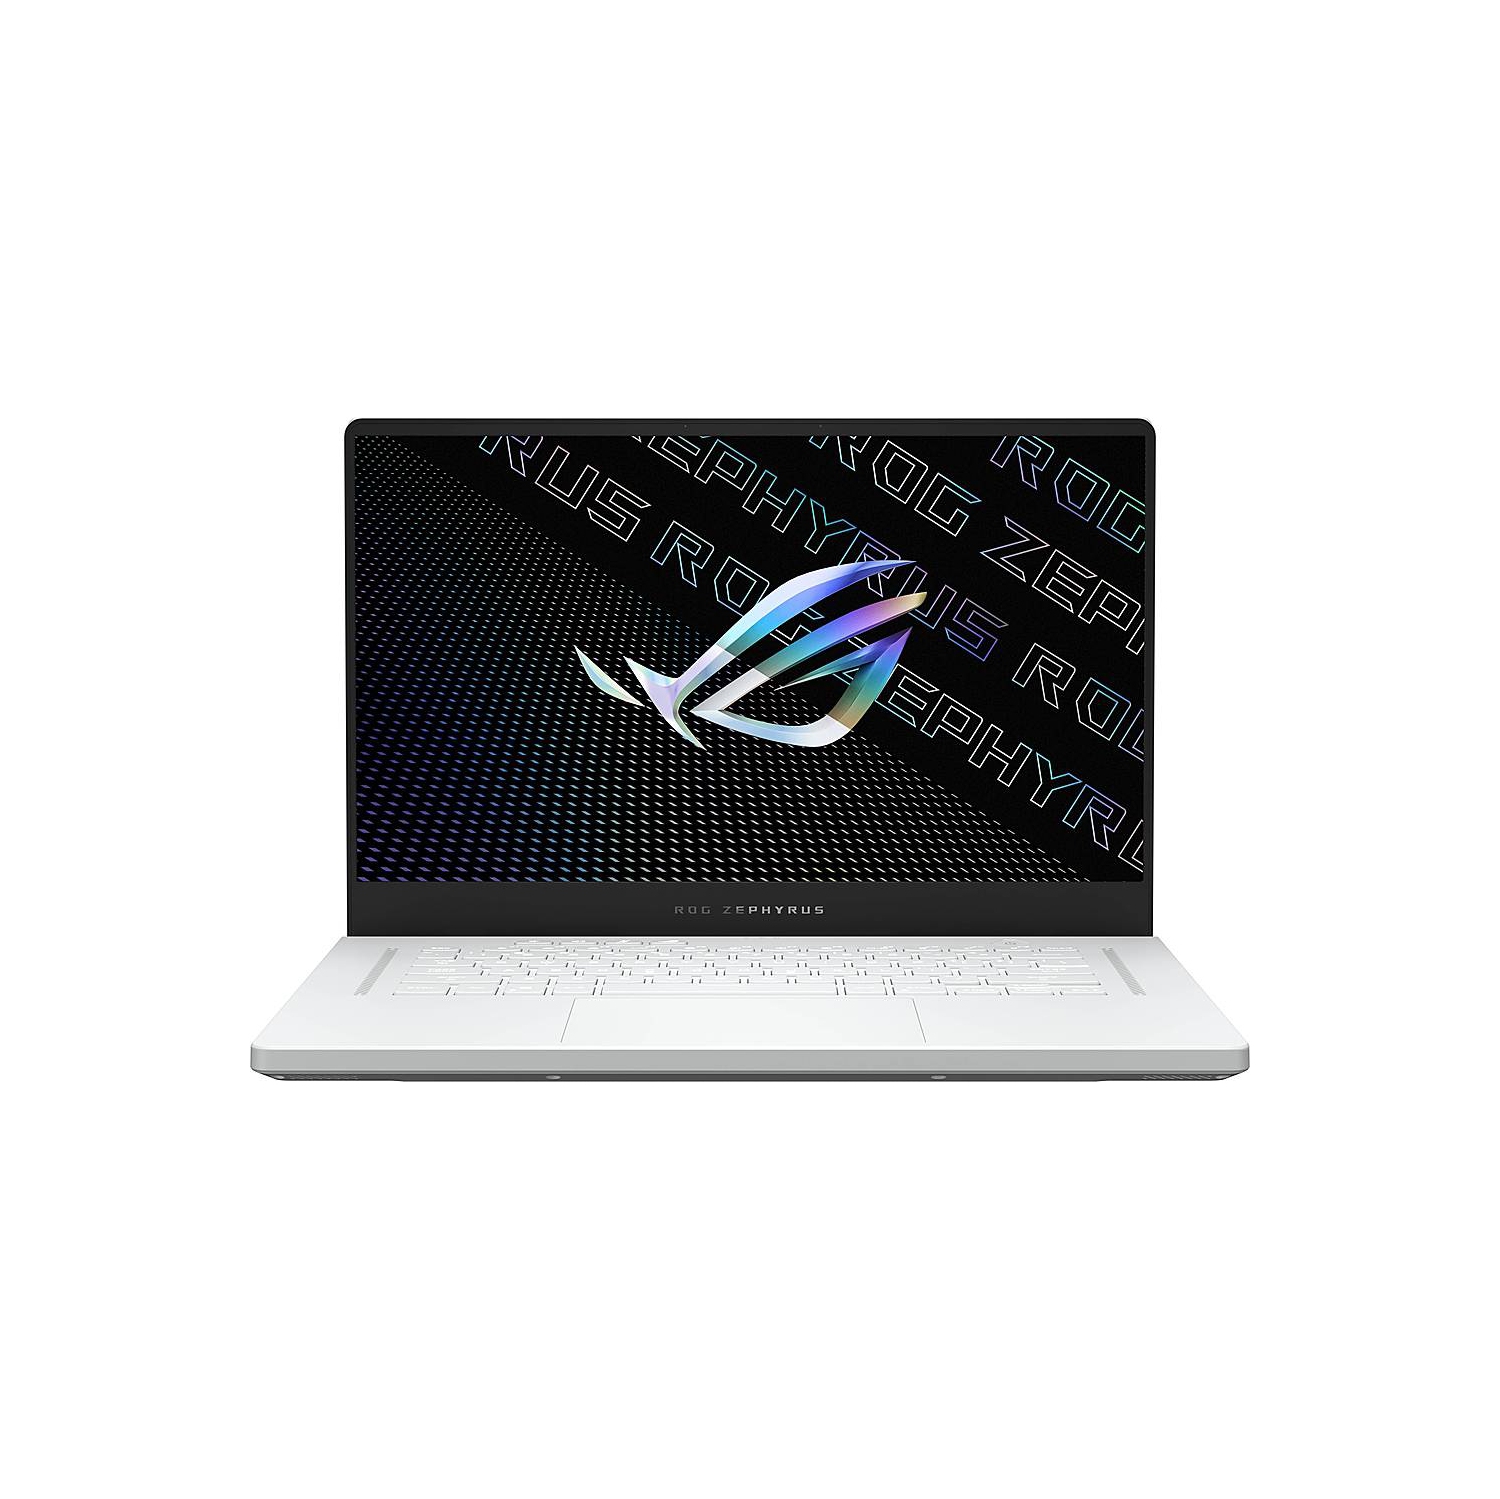 Custom ASUS ROG Zephyrus G15 Laptop (AMD Ryzen 9 5900HS, 32GB RAM, 2TB PCIe SSD, NVIDIA RTX 3080 Max-Q, Win 10 Pro)